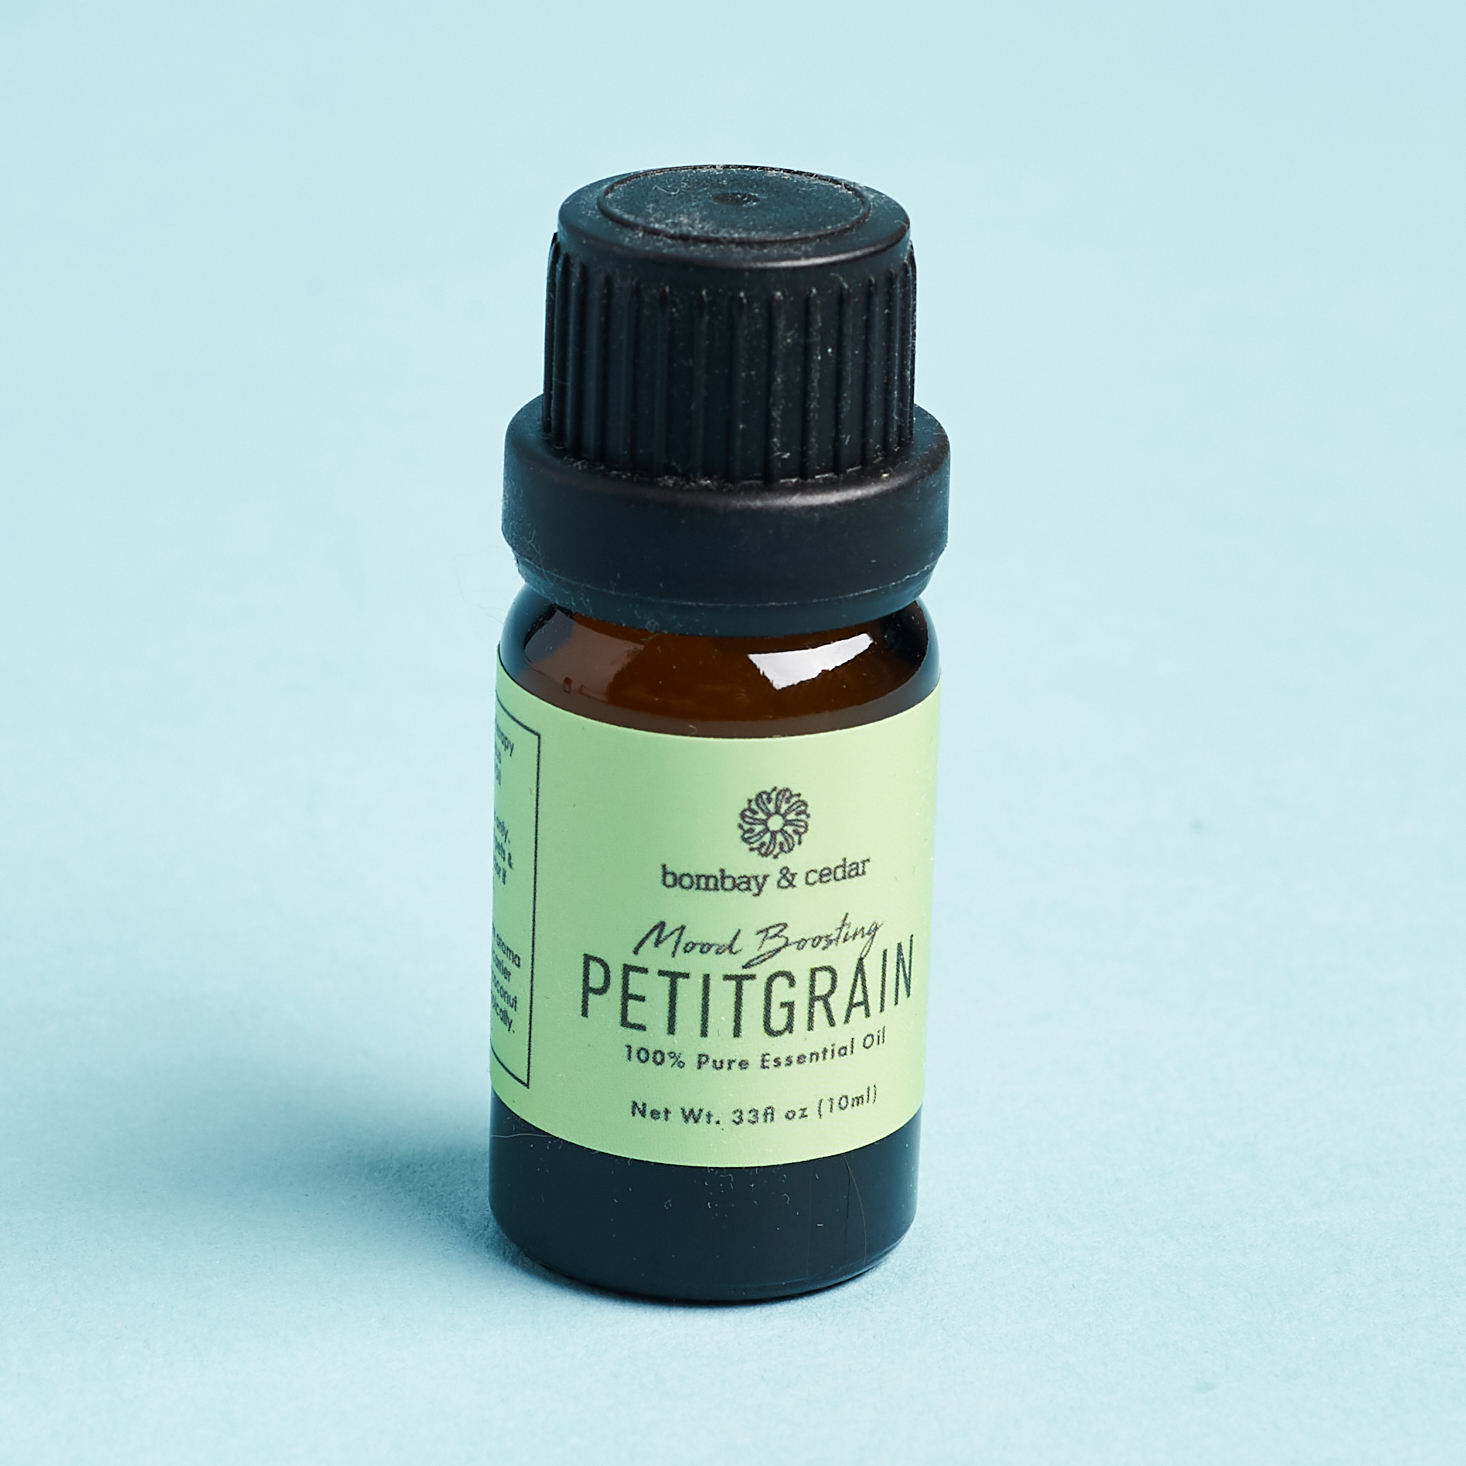 petitgrain oil bottle with green label